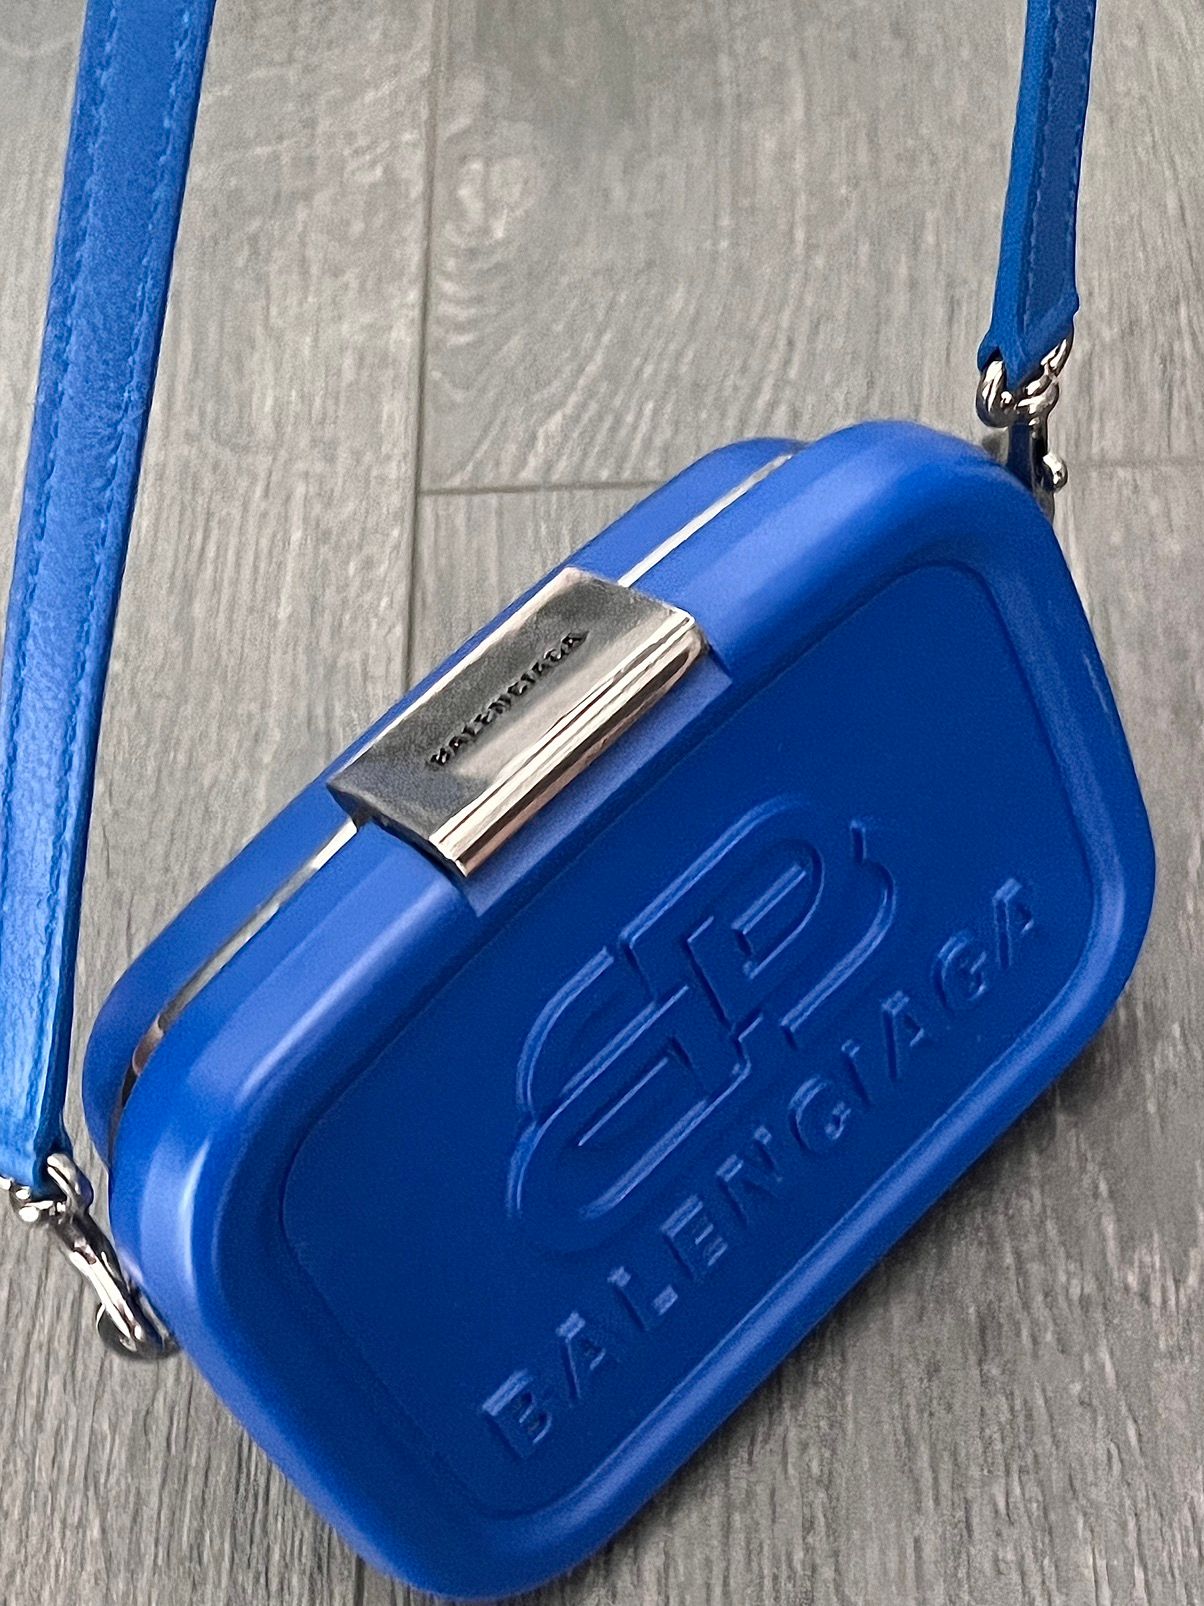 11.11 flash sale !!! Balenciaga lunch box mini bag Condition